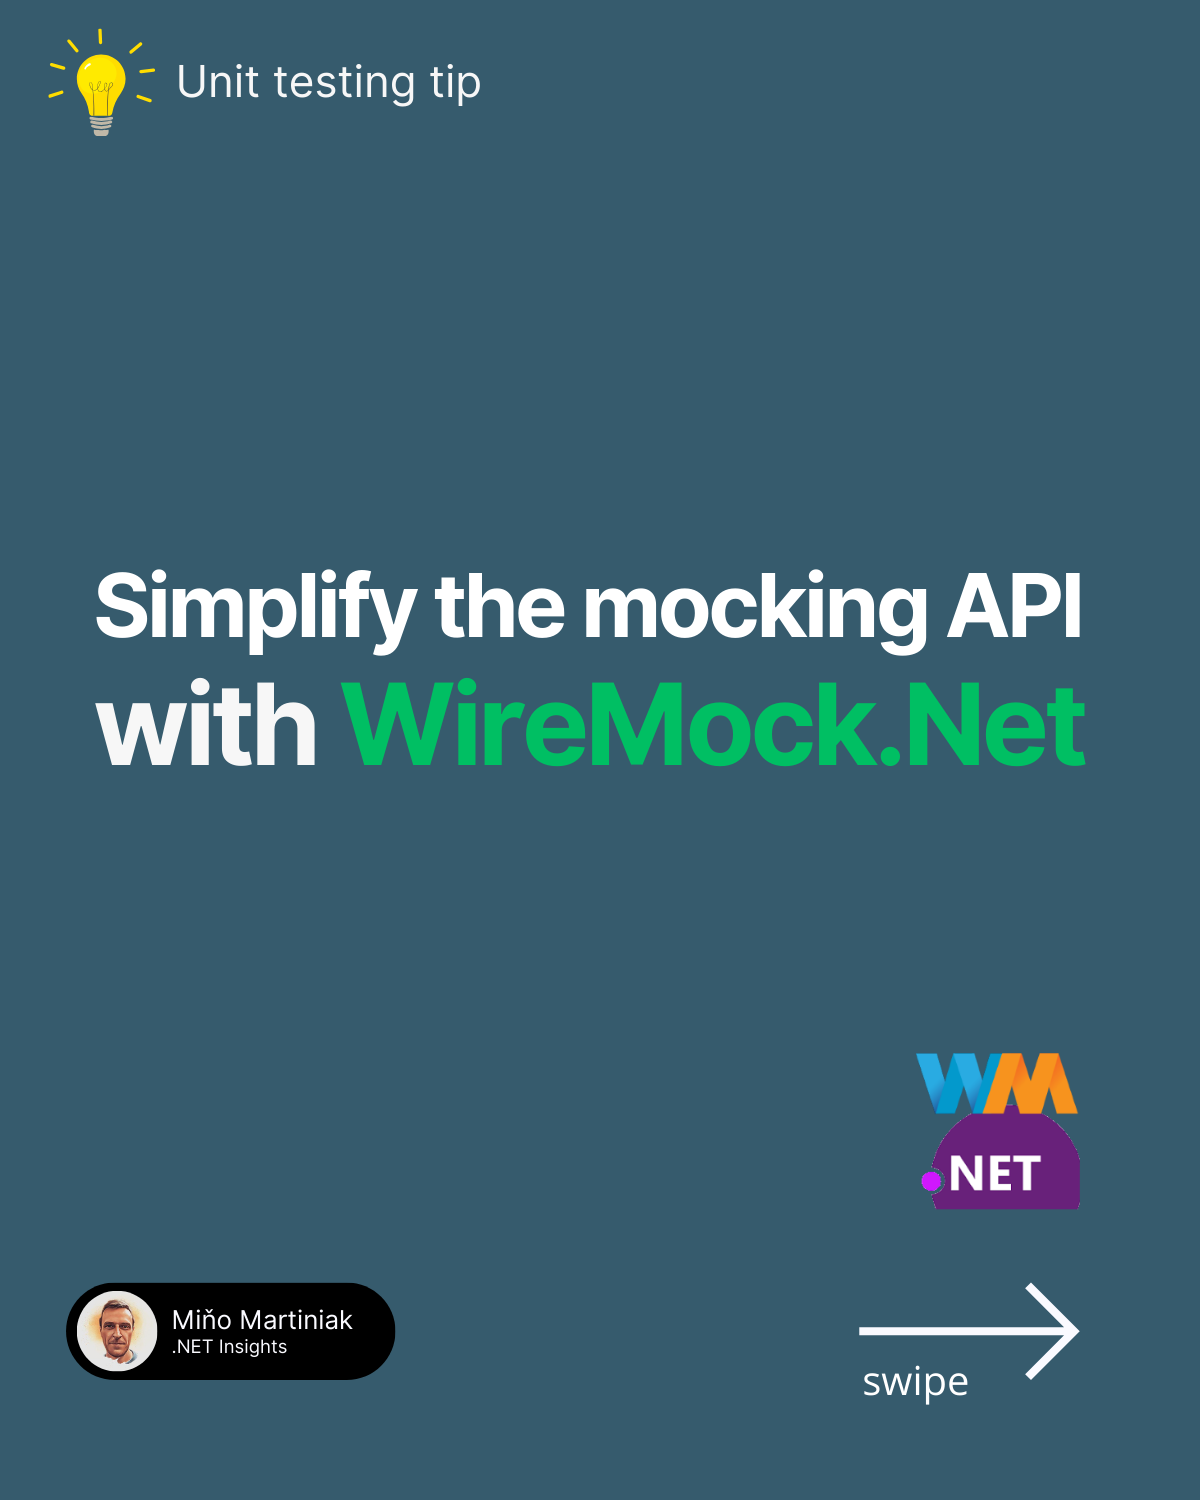 WireMock.NET